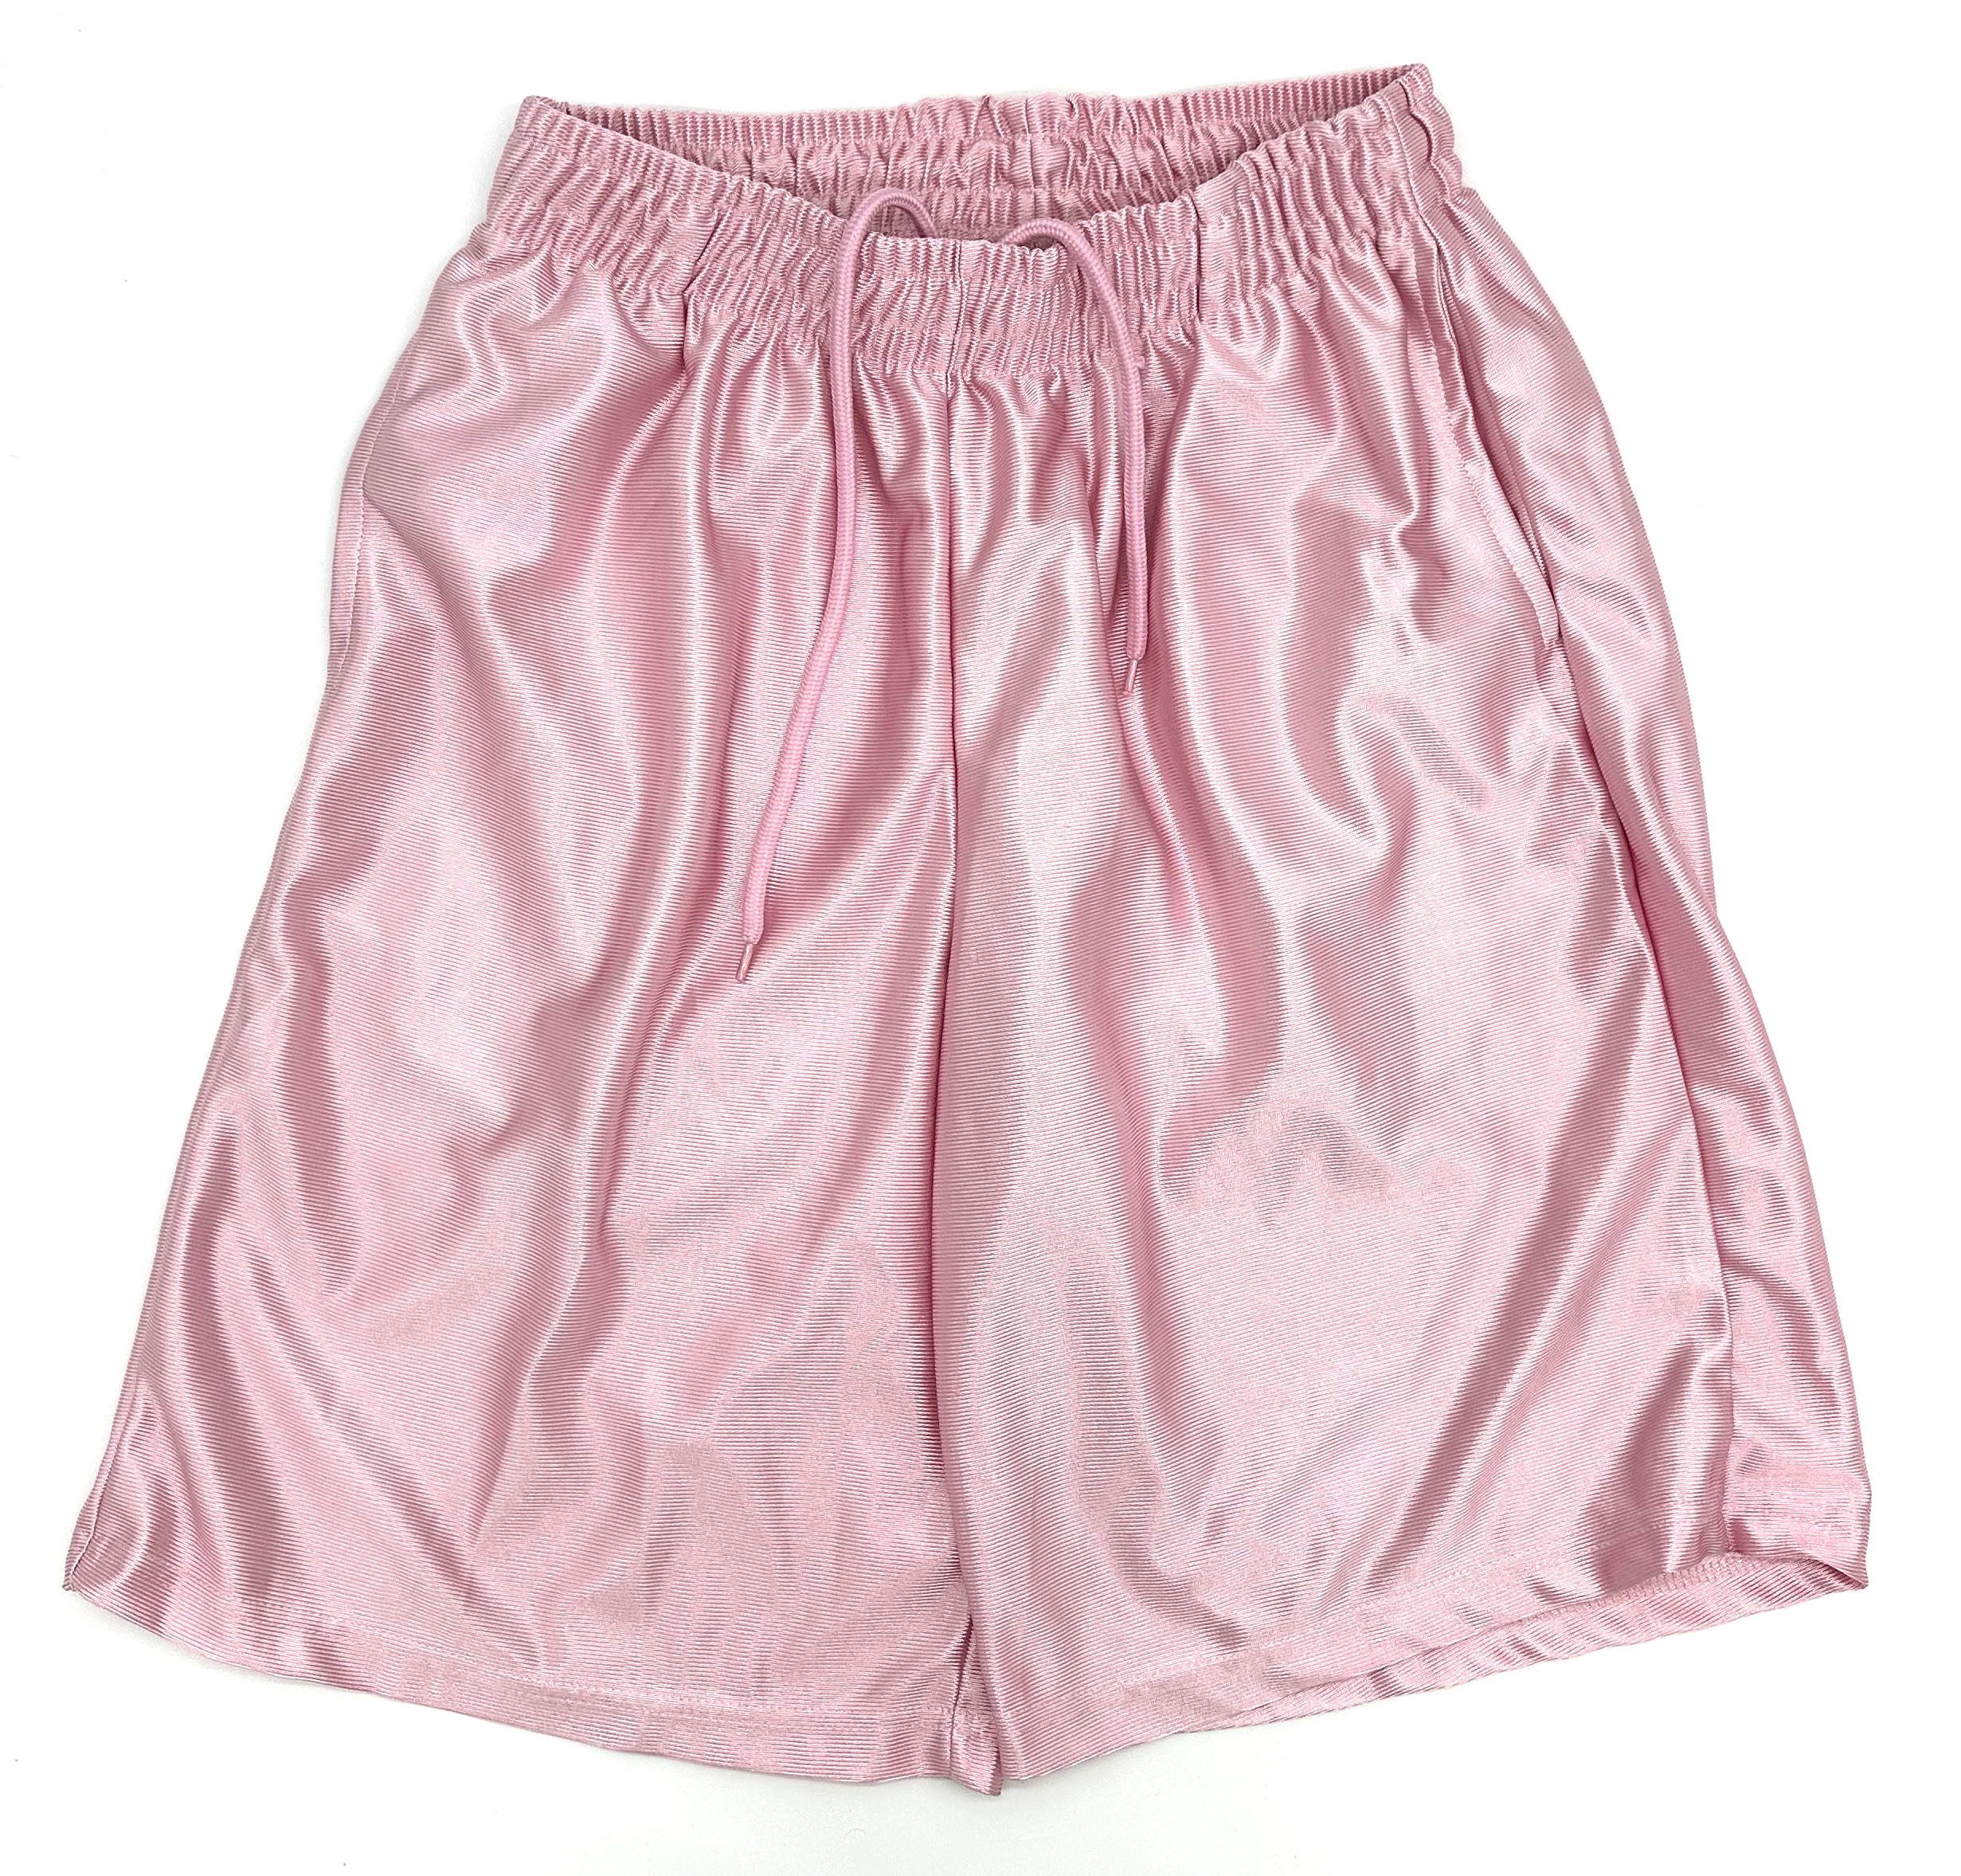 Pink dazzle shorts - SBOXERS